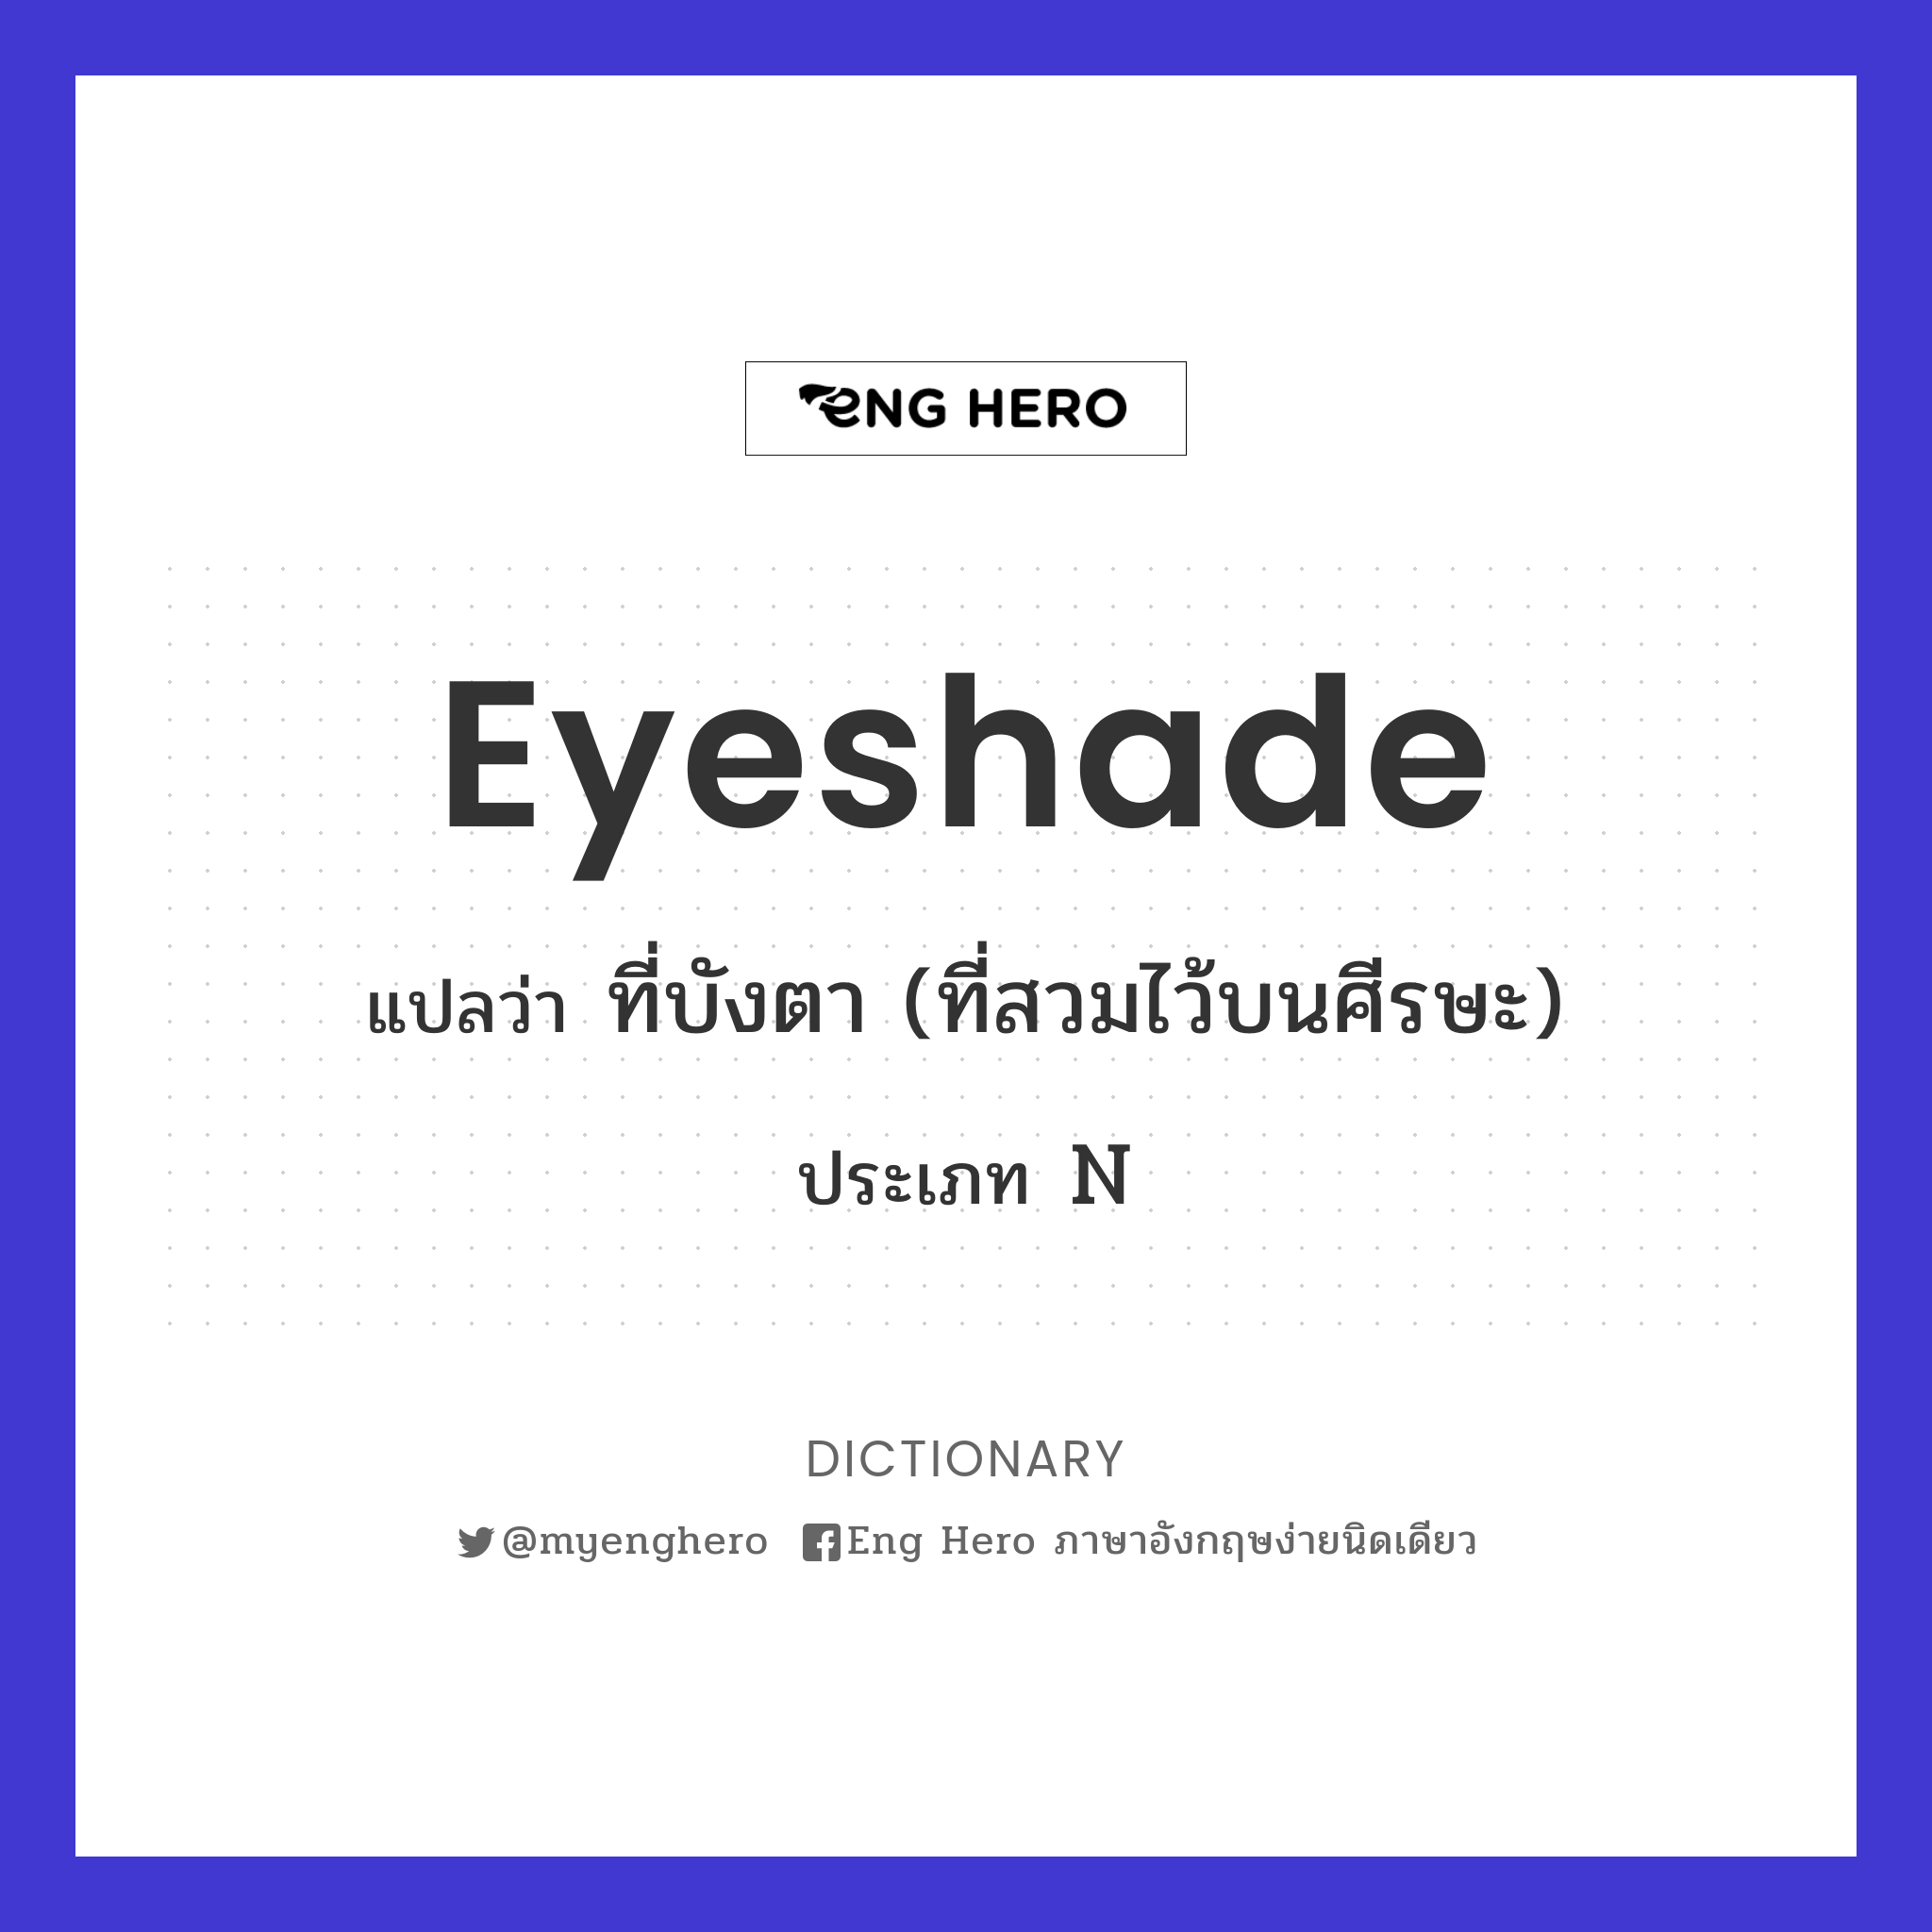 eyeshade